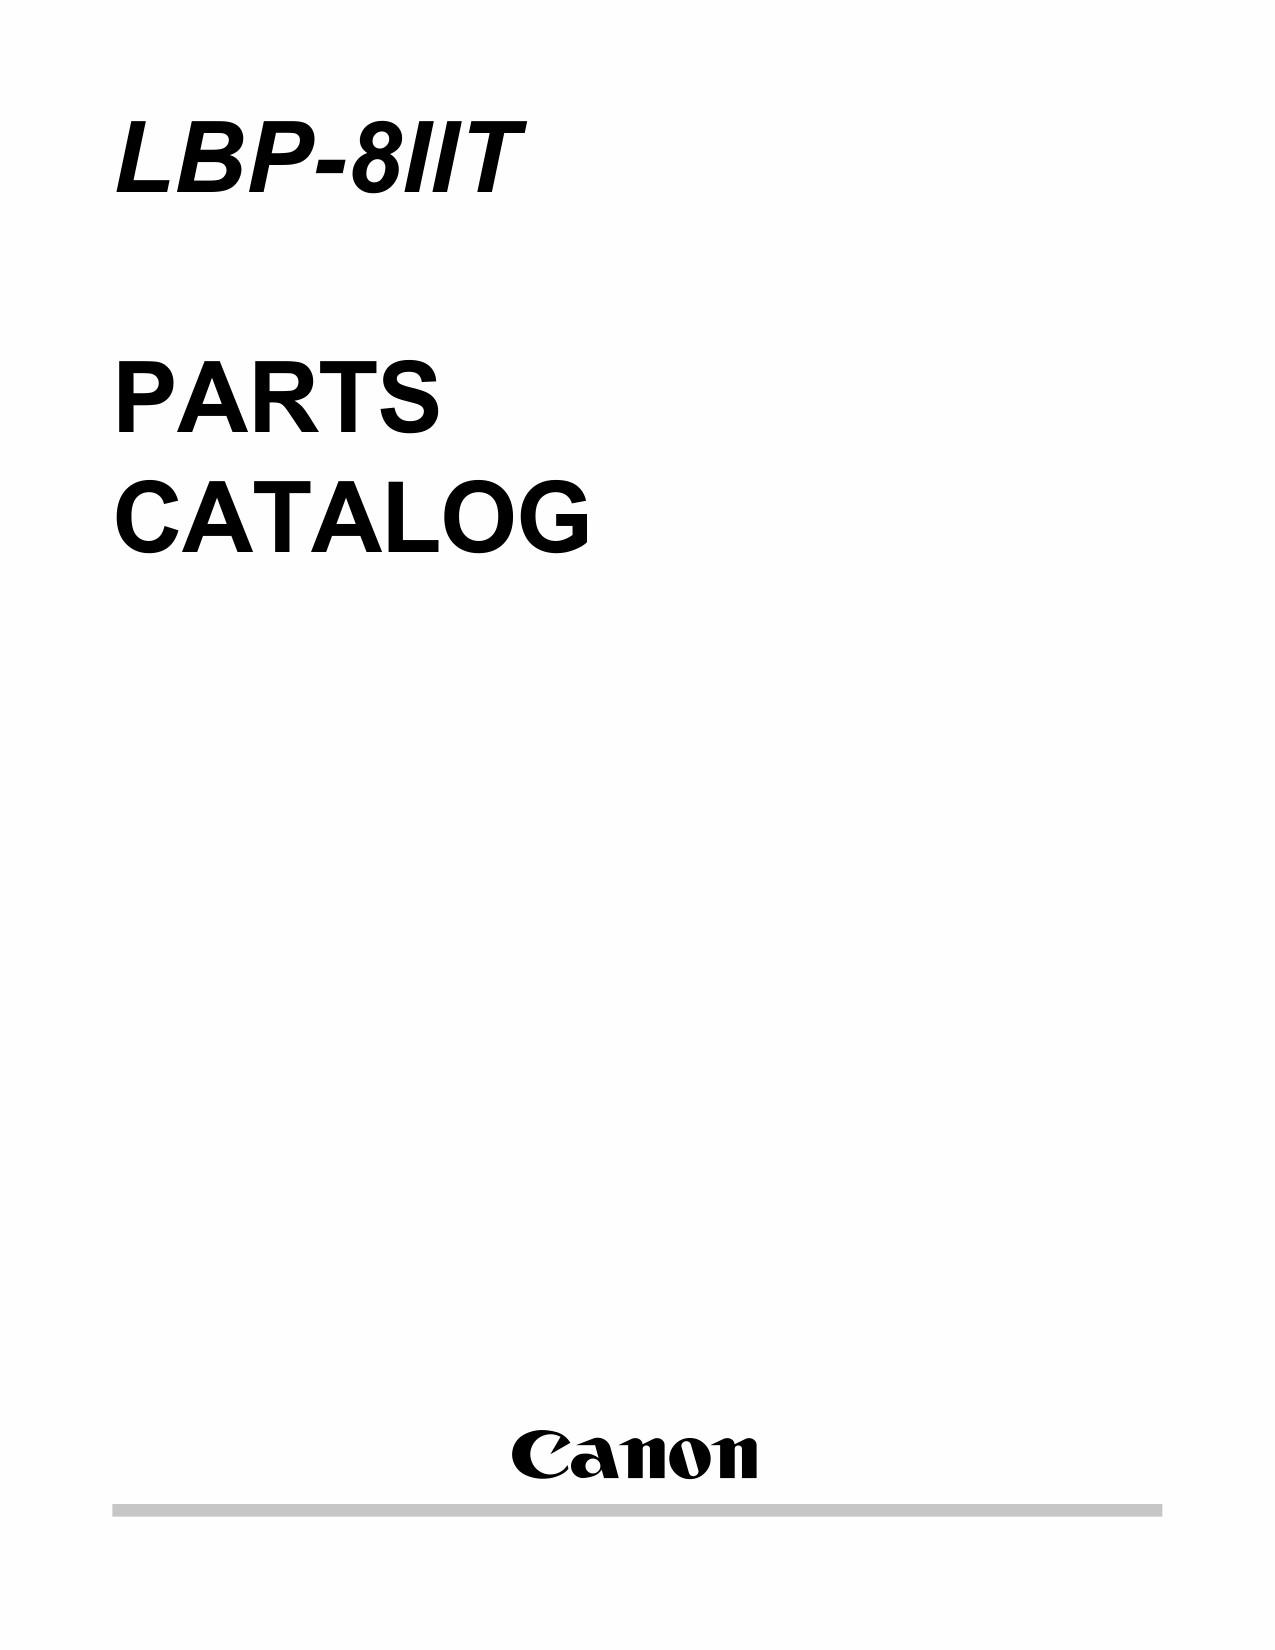 Canon imageCLASS LBP-8IIT Parts Catalog Manual-1